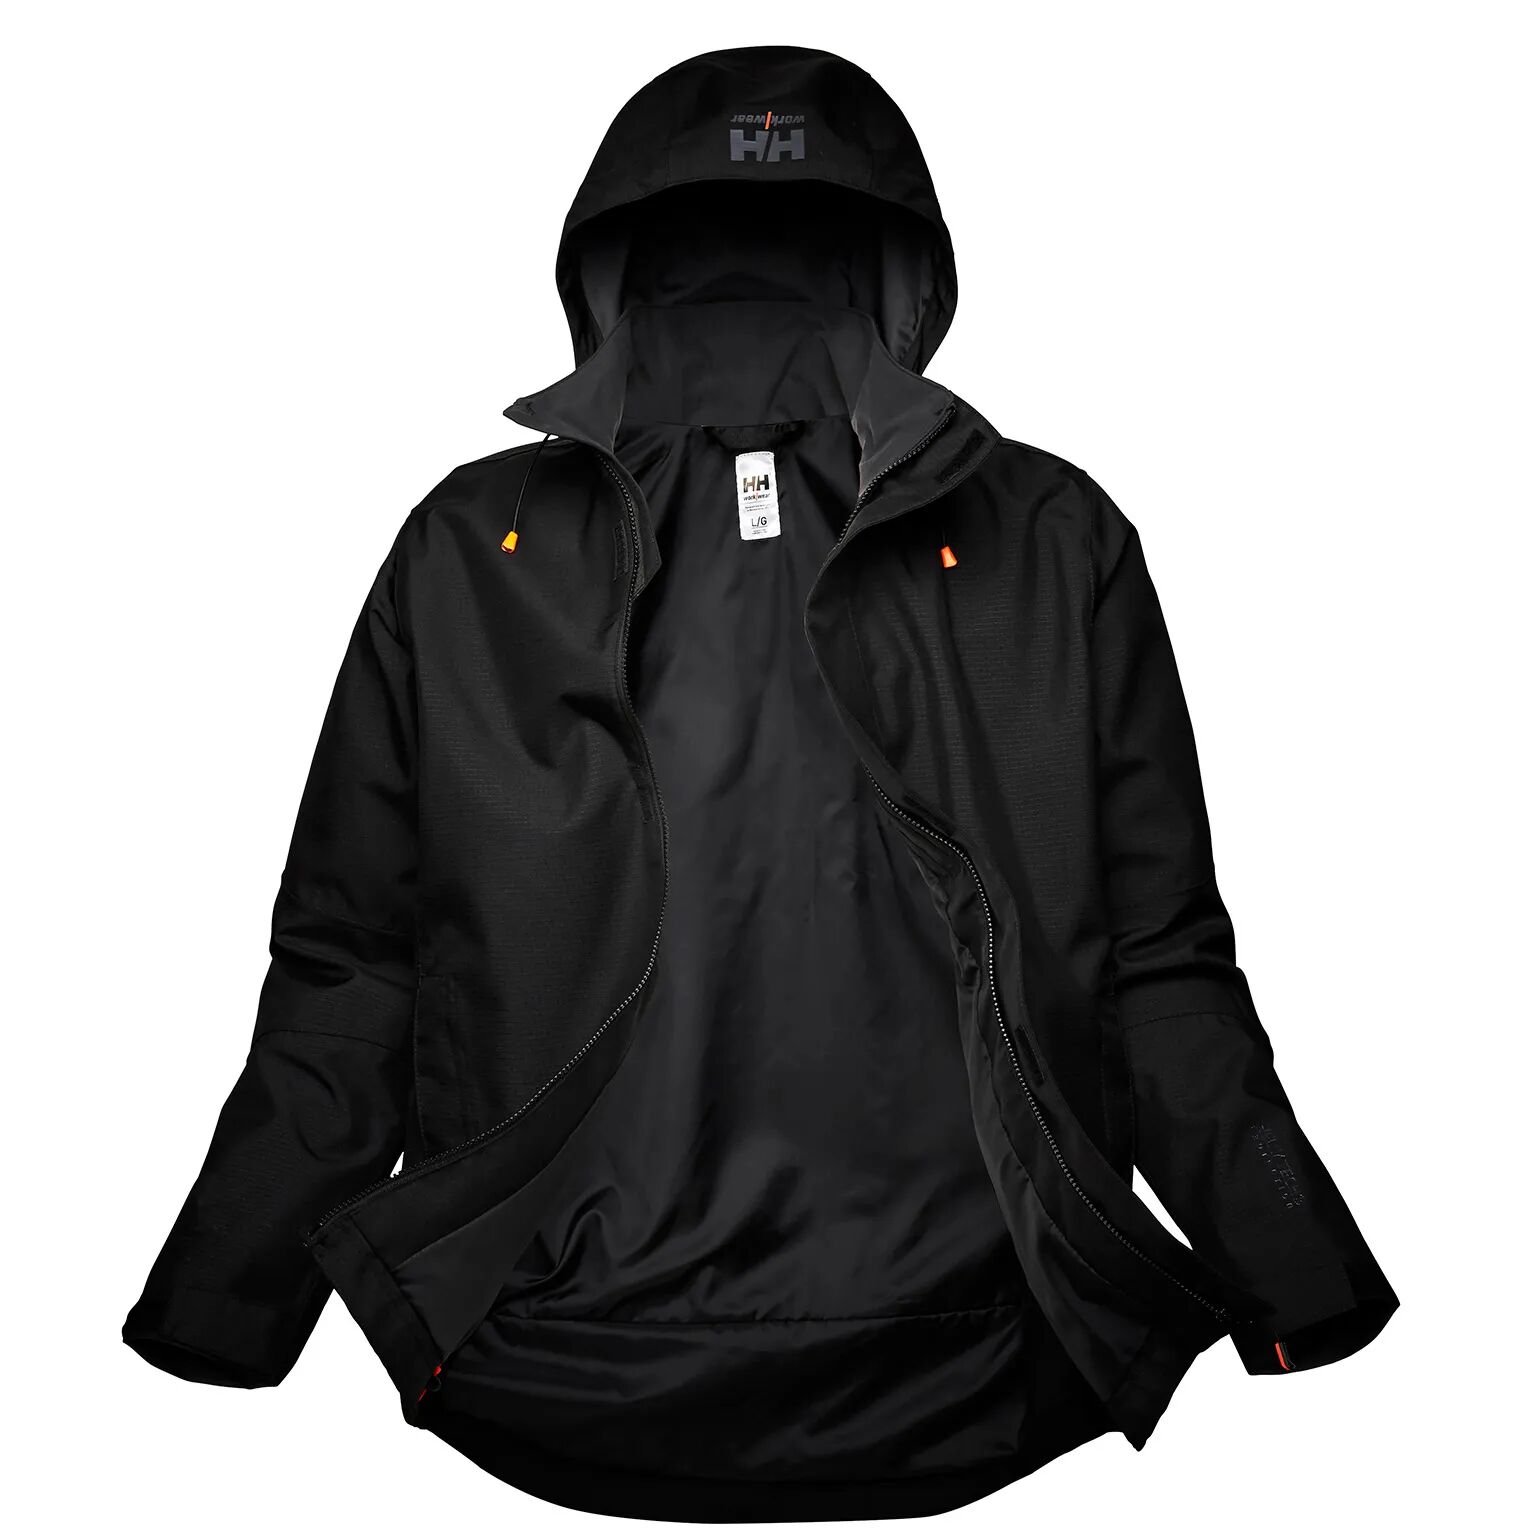 HH Workwear Helly Hansen WorkwearOxford Breathable Waterproof Shell Jacket Black XS